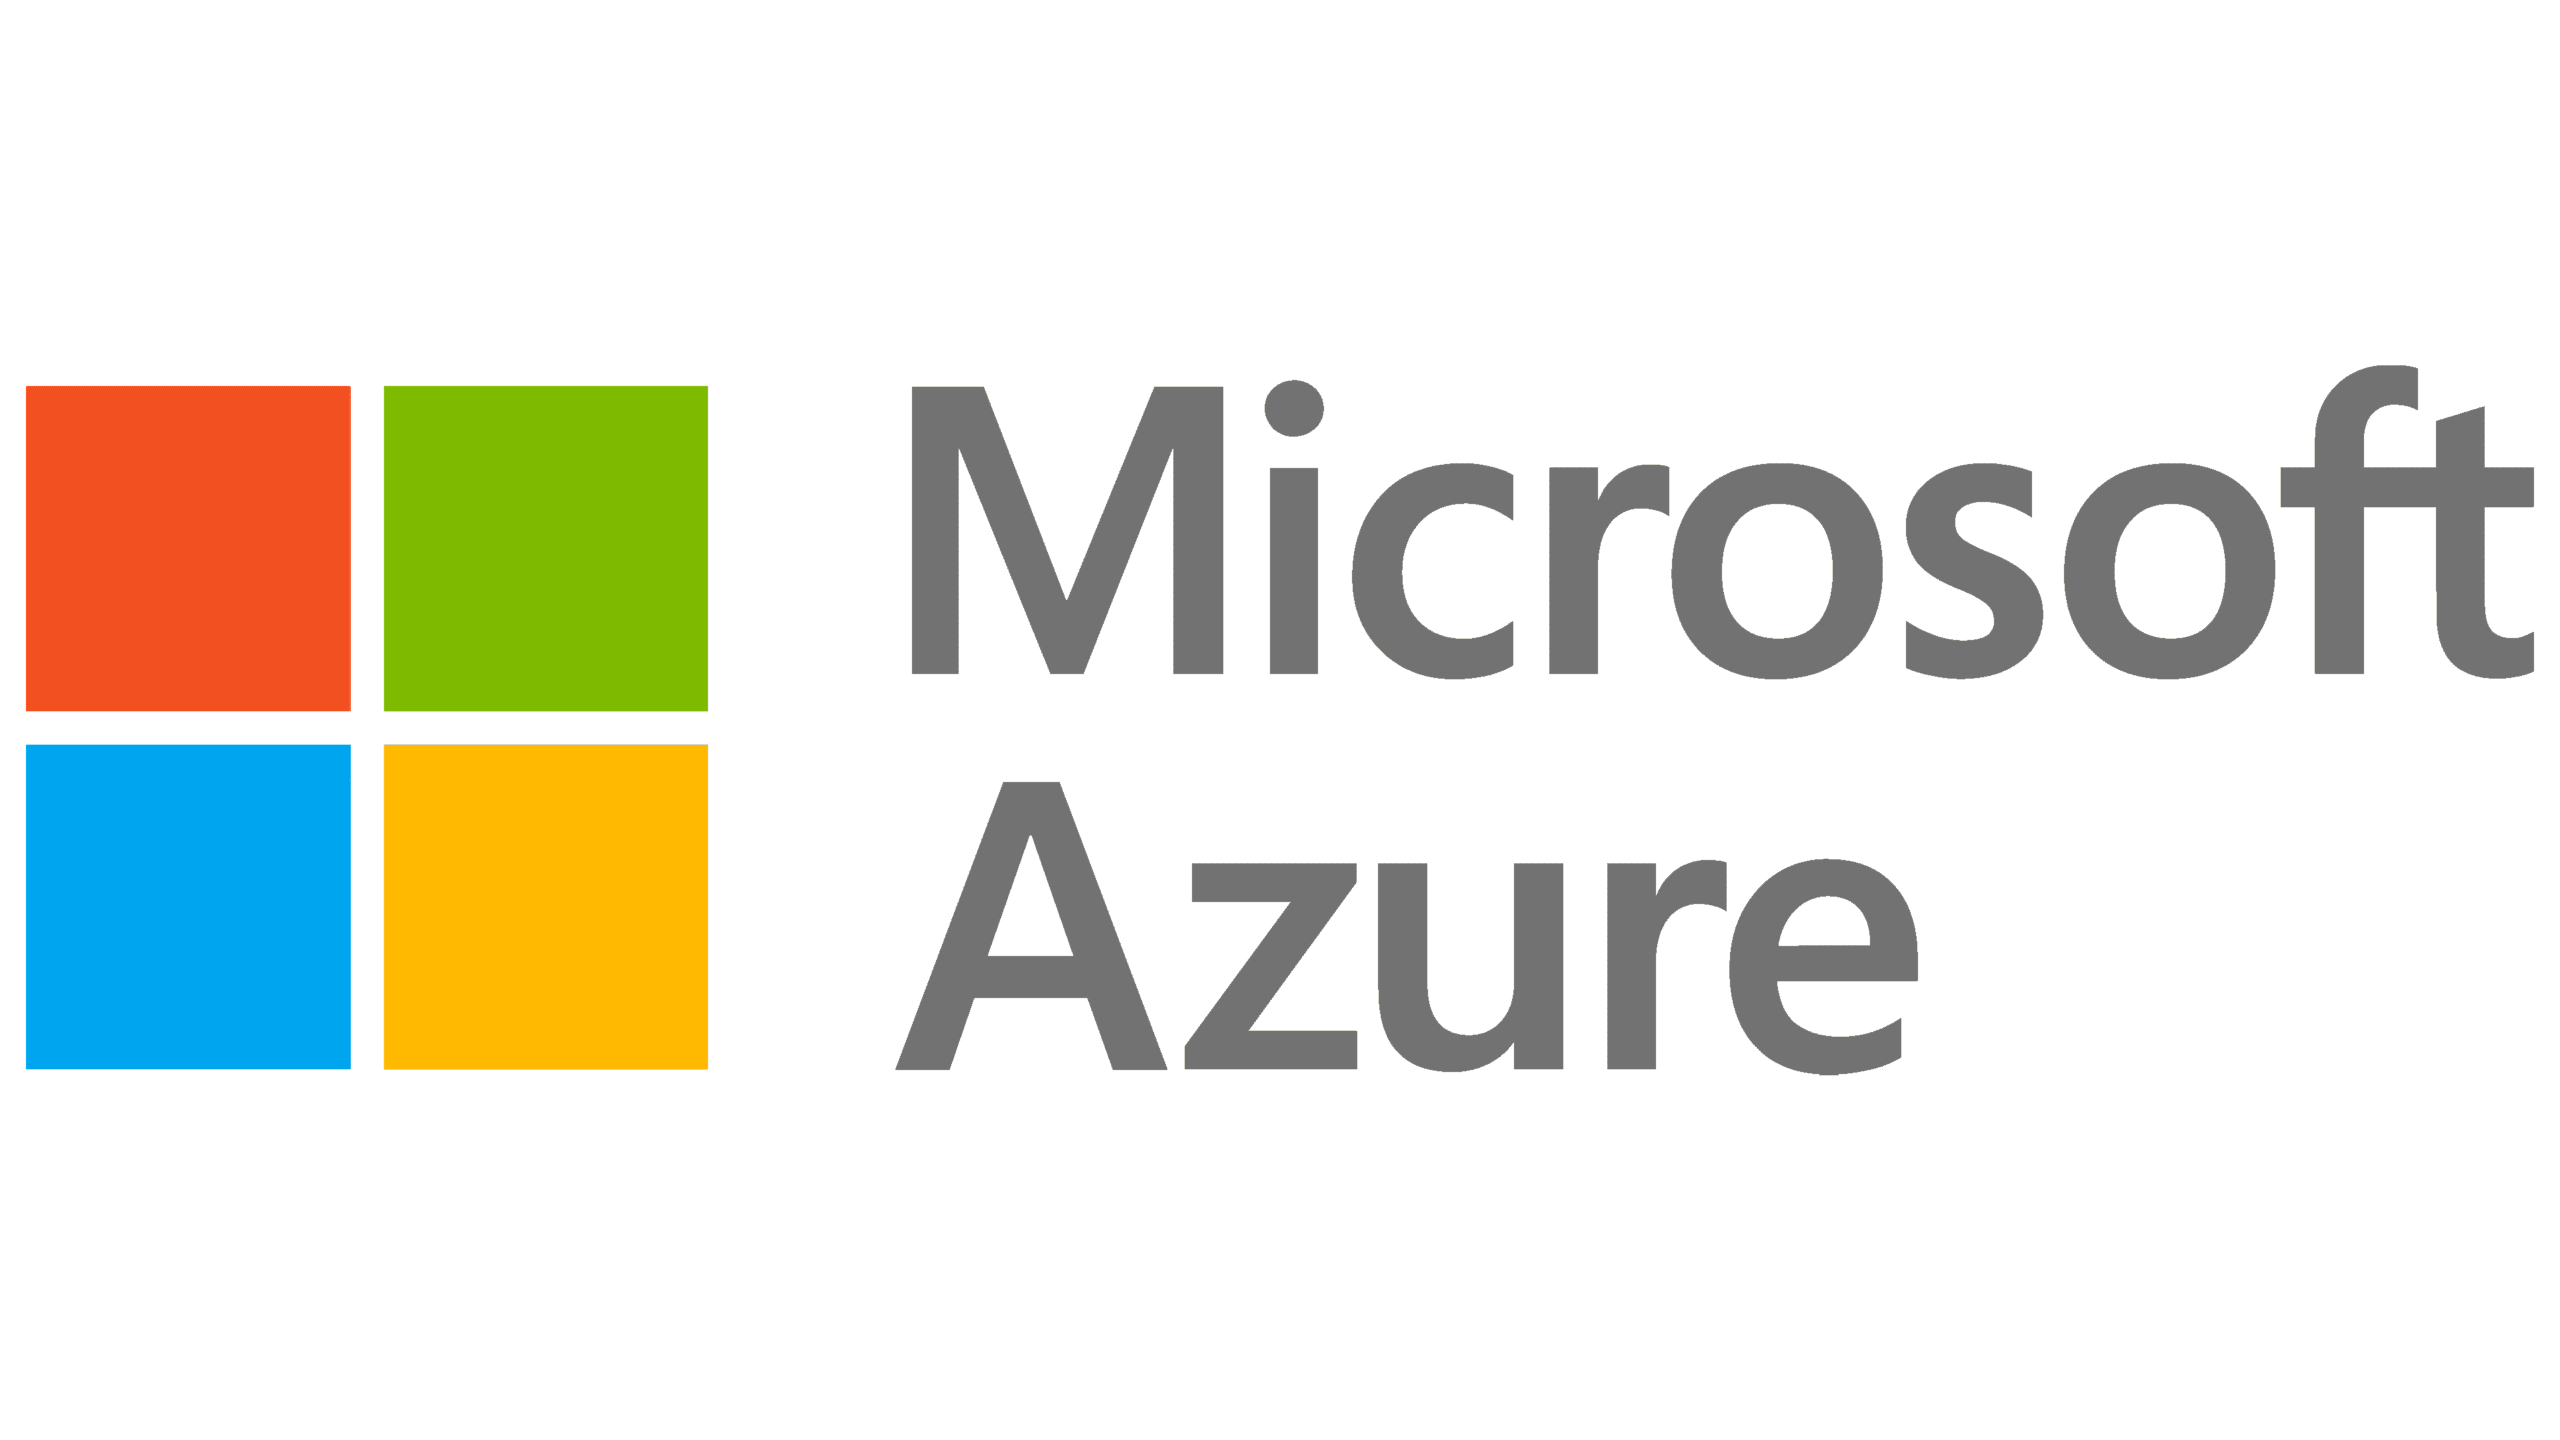 Microsoft_Azure_logo